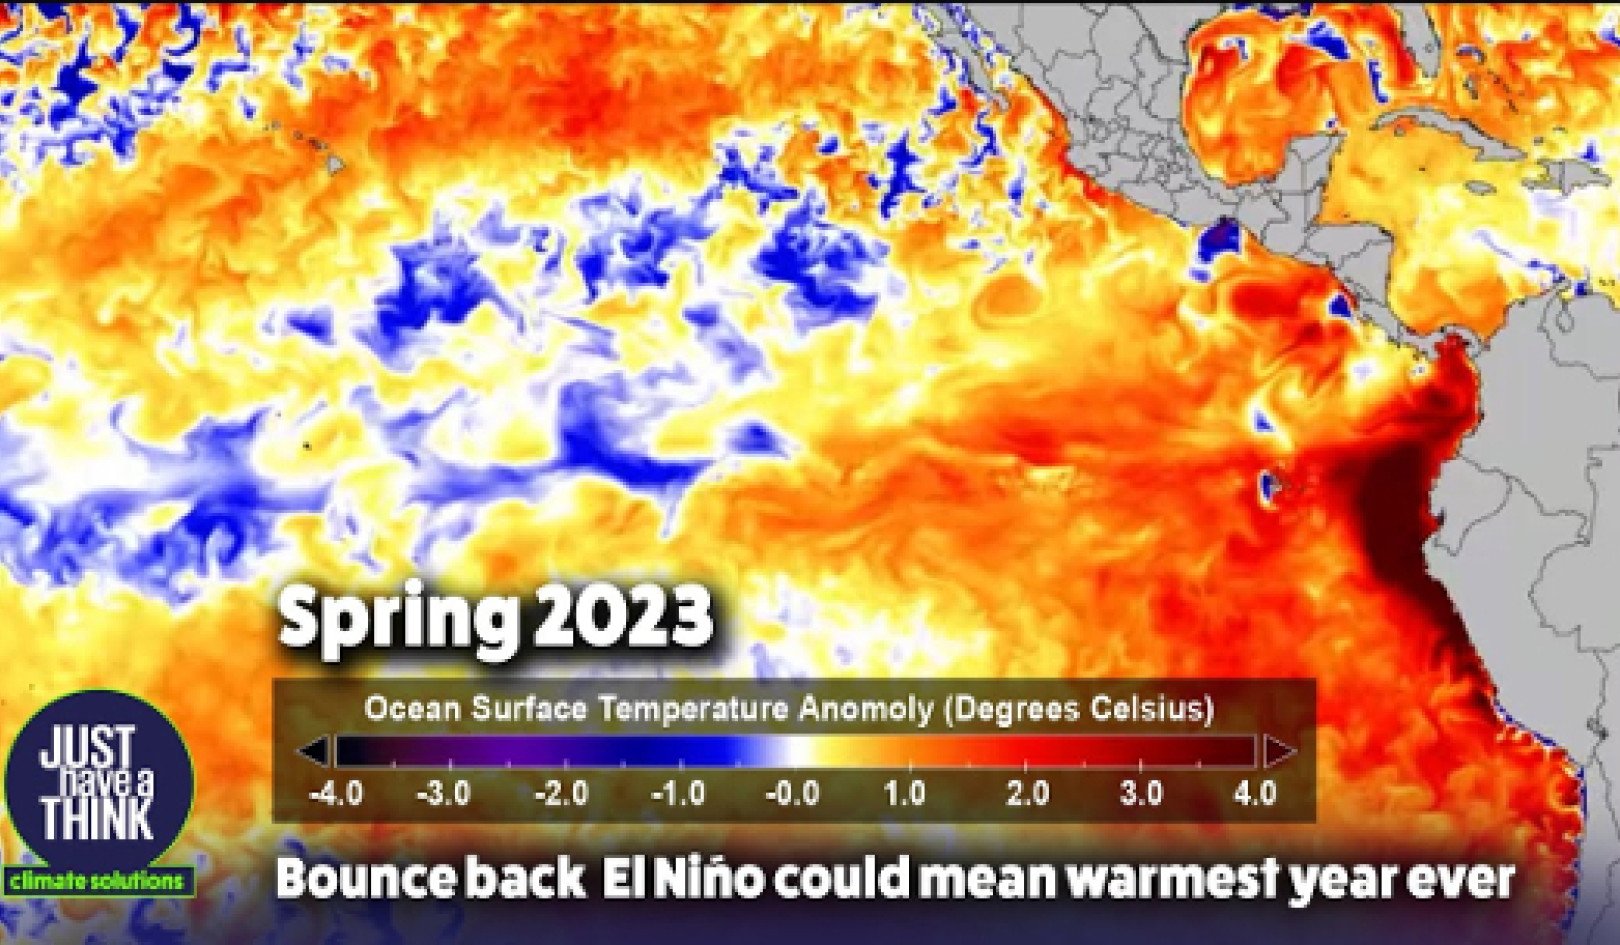 Den uforutsigbare naturen til El Niño: Forstå dens innvirkning på globale værmønstre